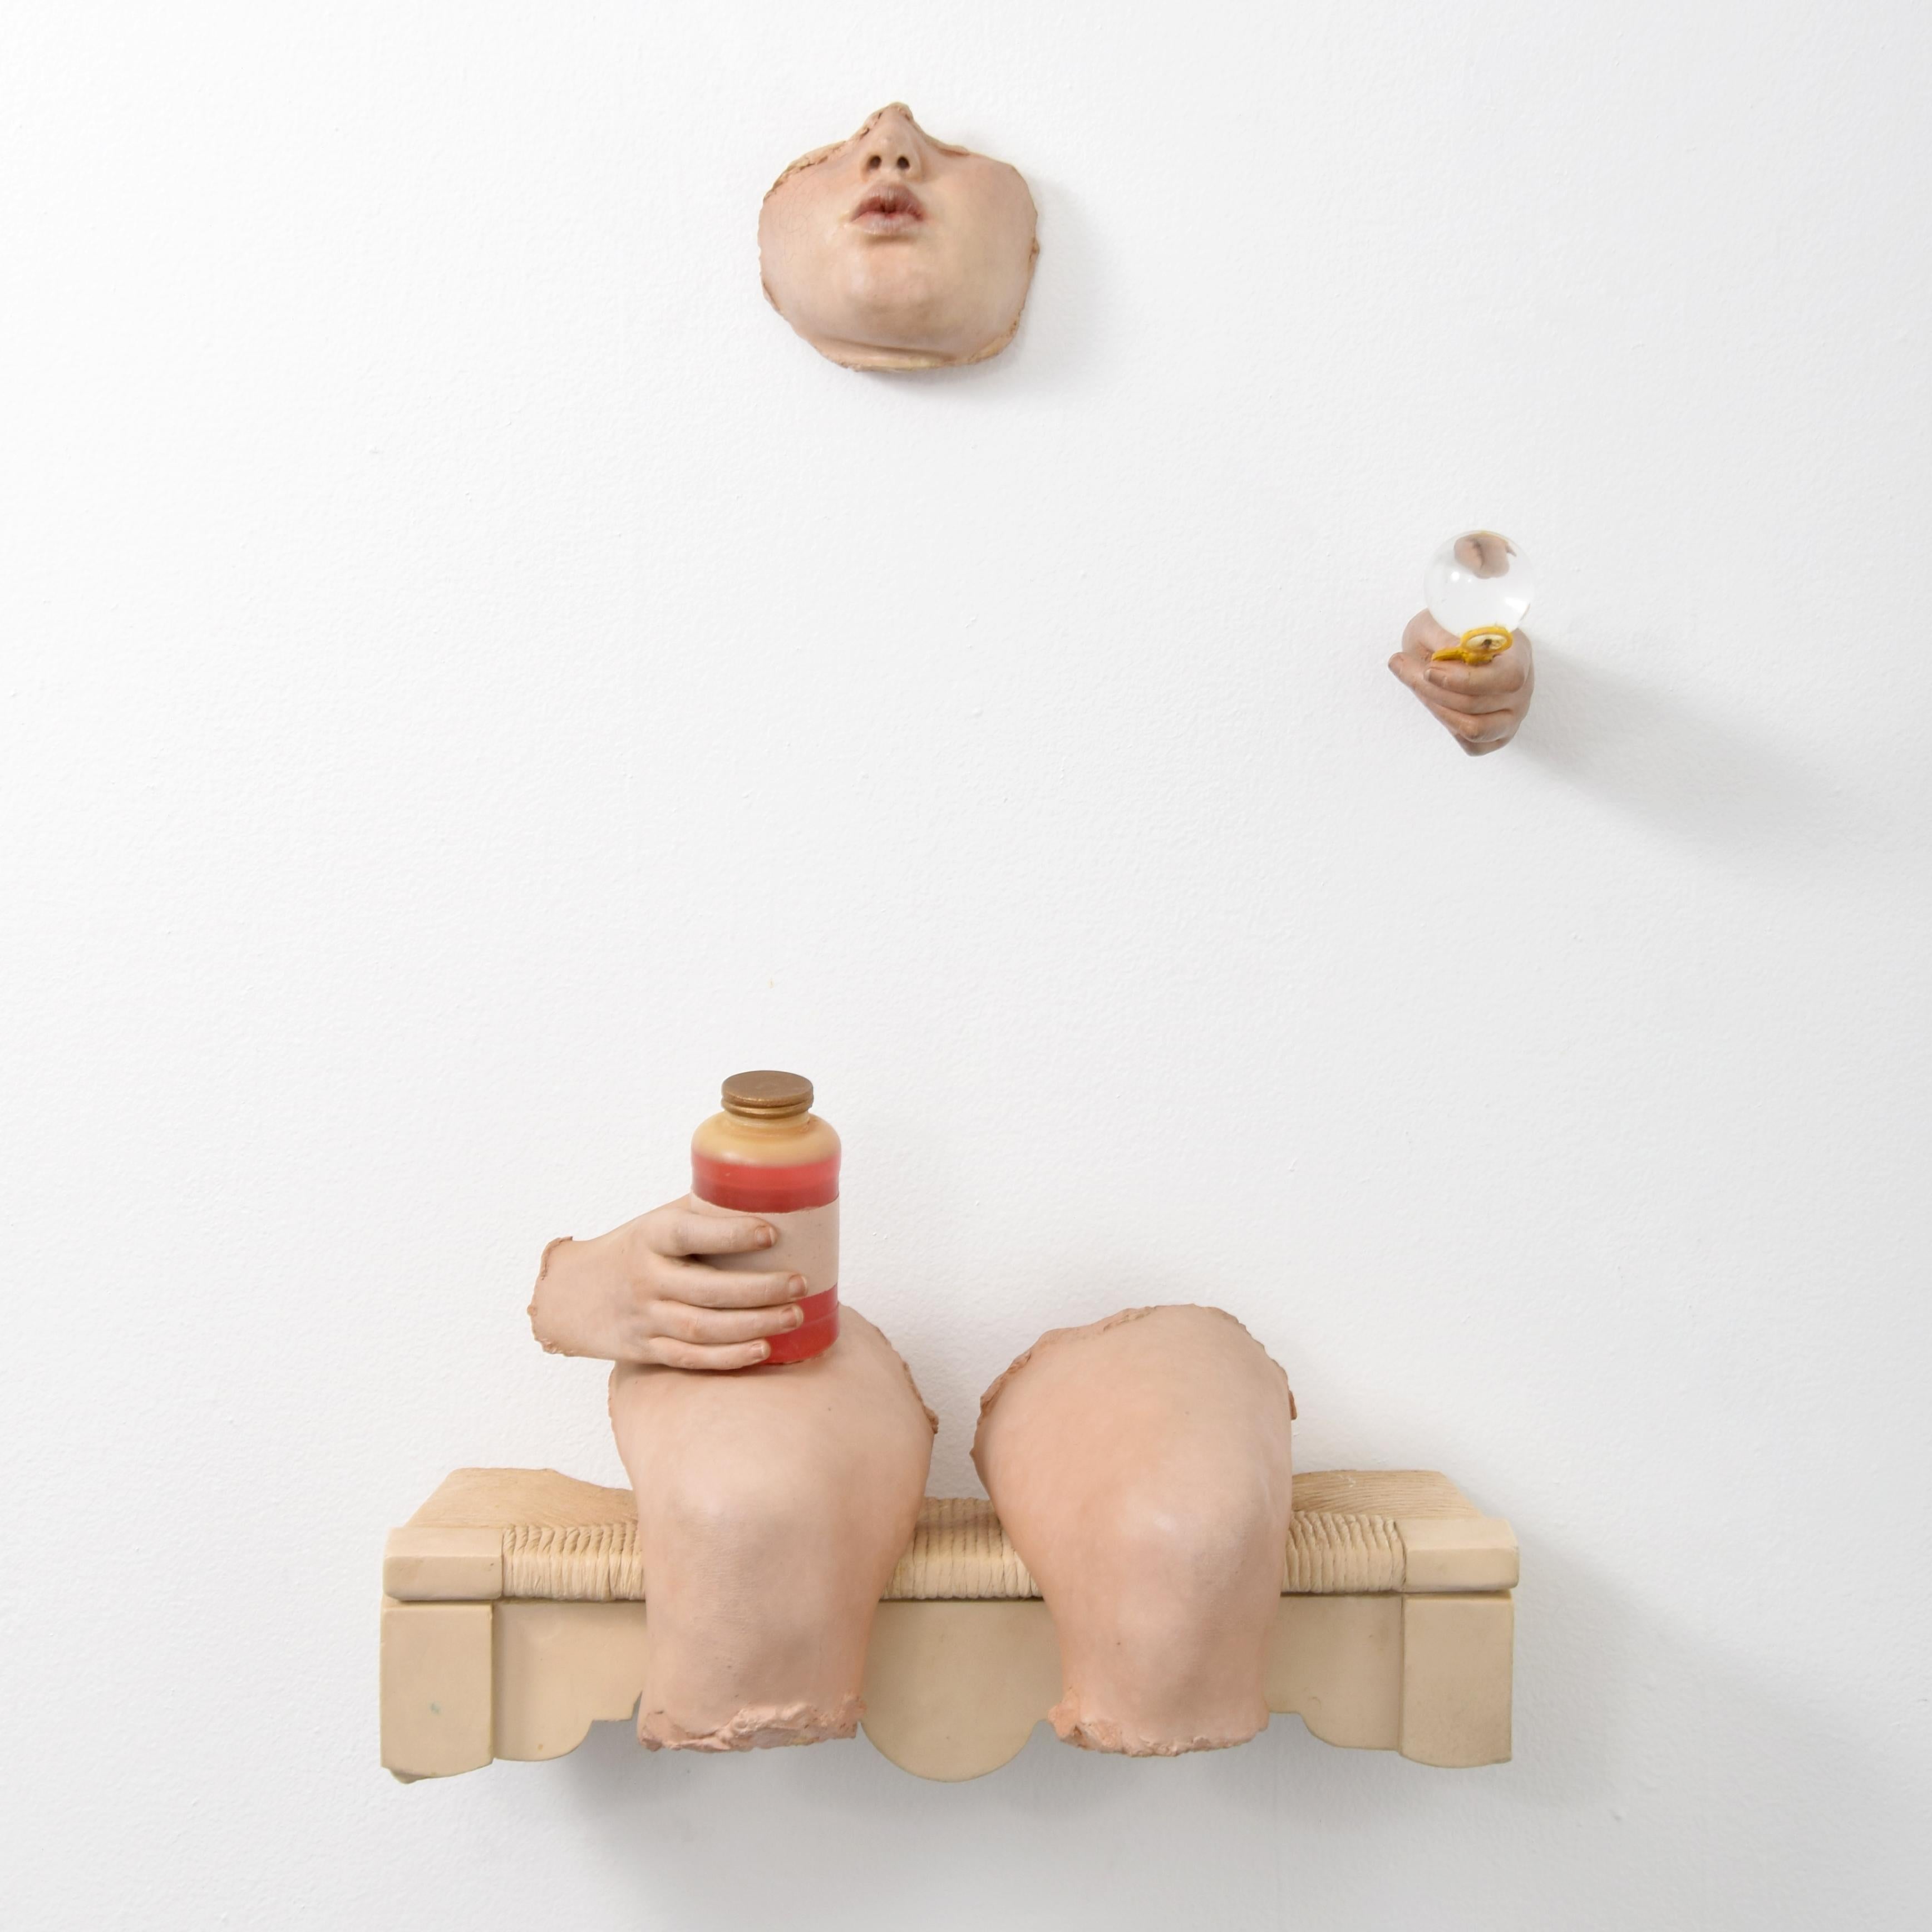 Carole Feuerman Hyperrealistische Skulptur-Installation